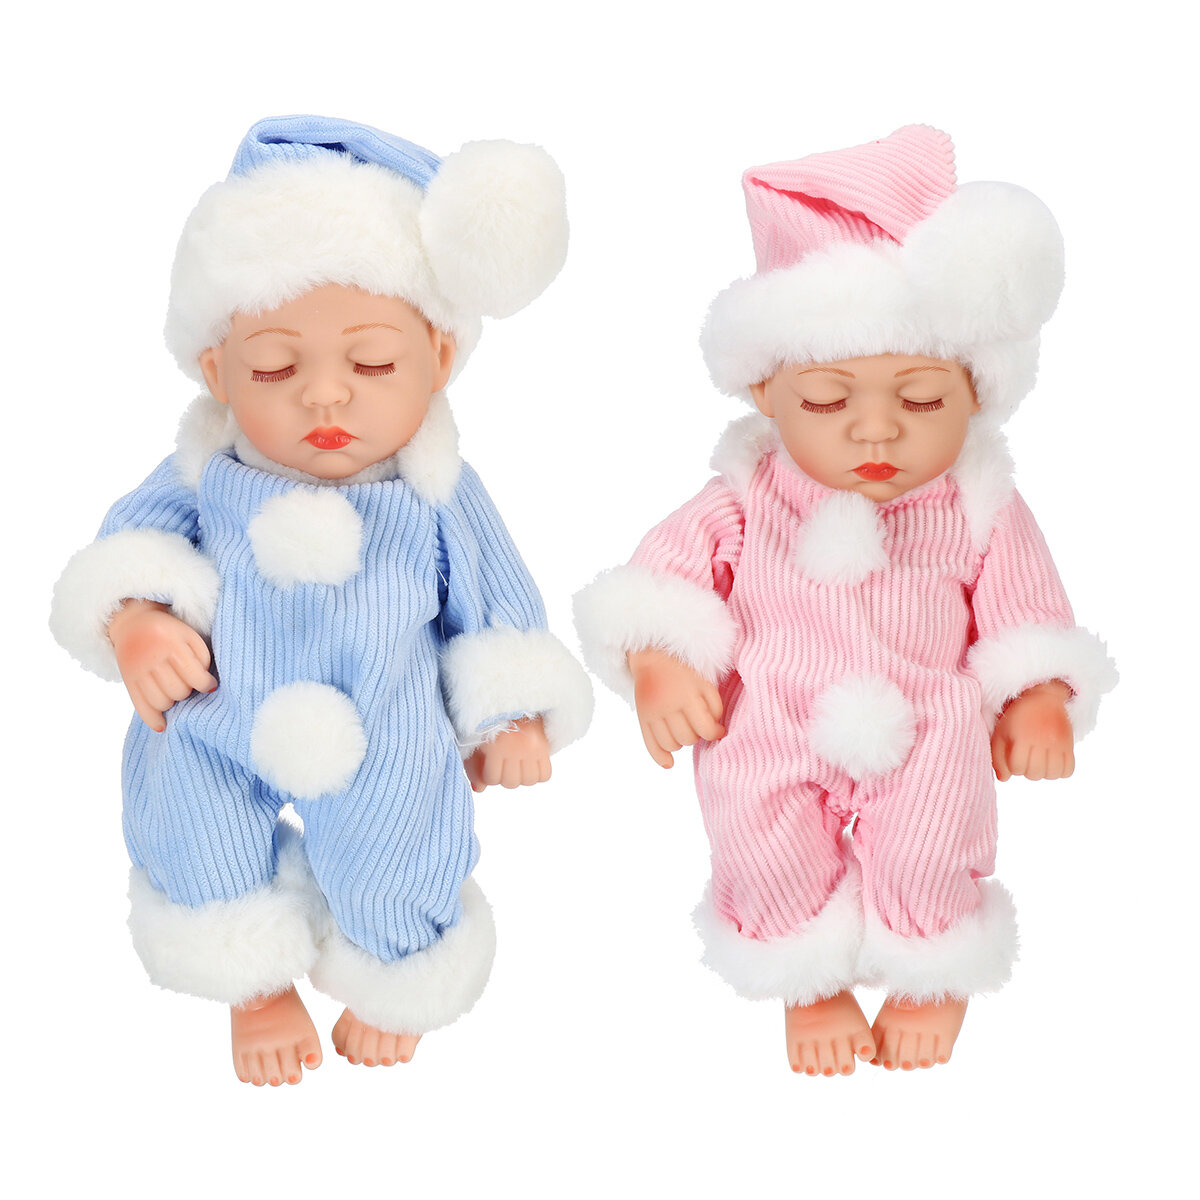 30cm Doll Imitation Baby Doll Toys